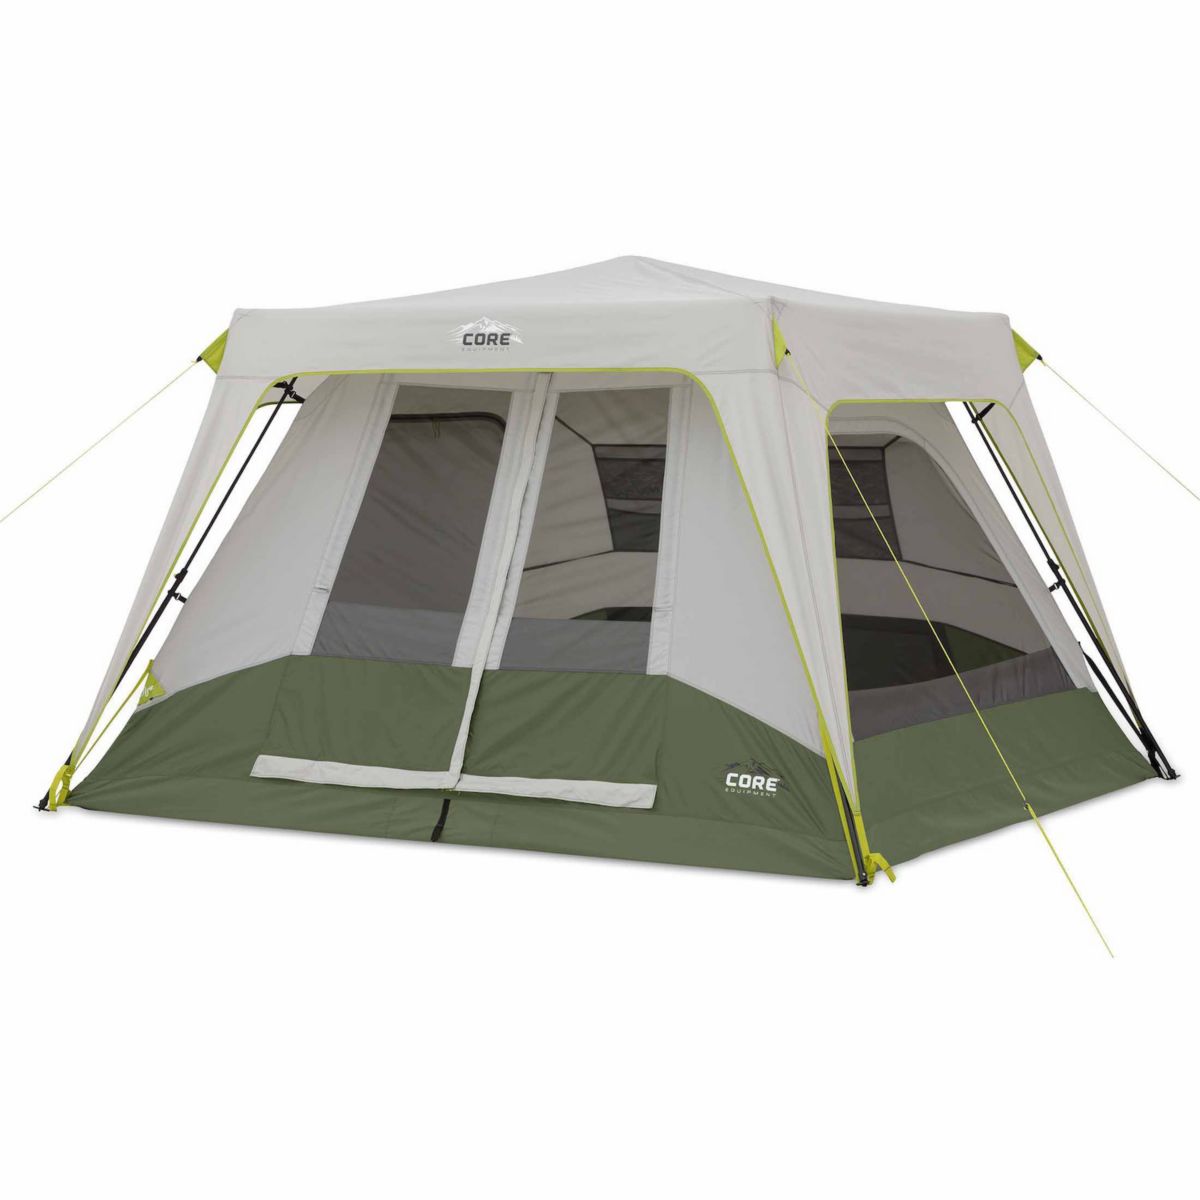 Core Performance 6 Person Instant Cabin Tent CORE